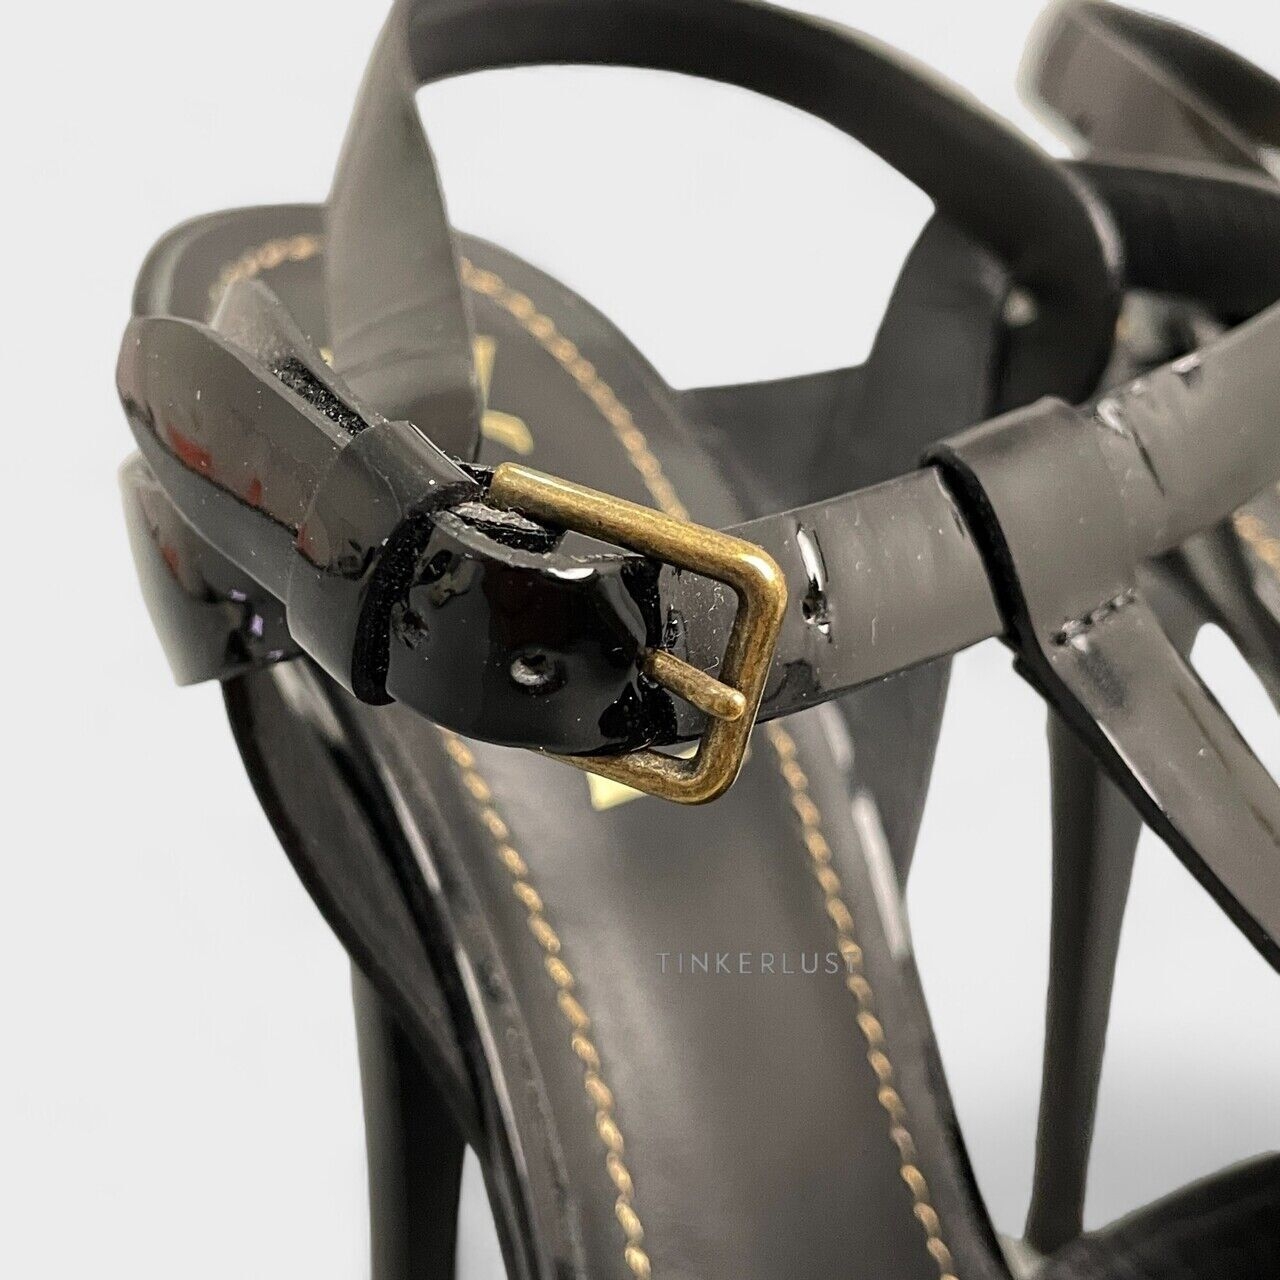 Saint Laurent Patent Leather Tribute Black Heels